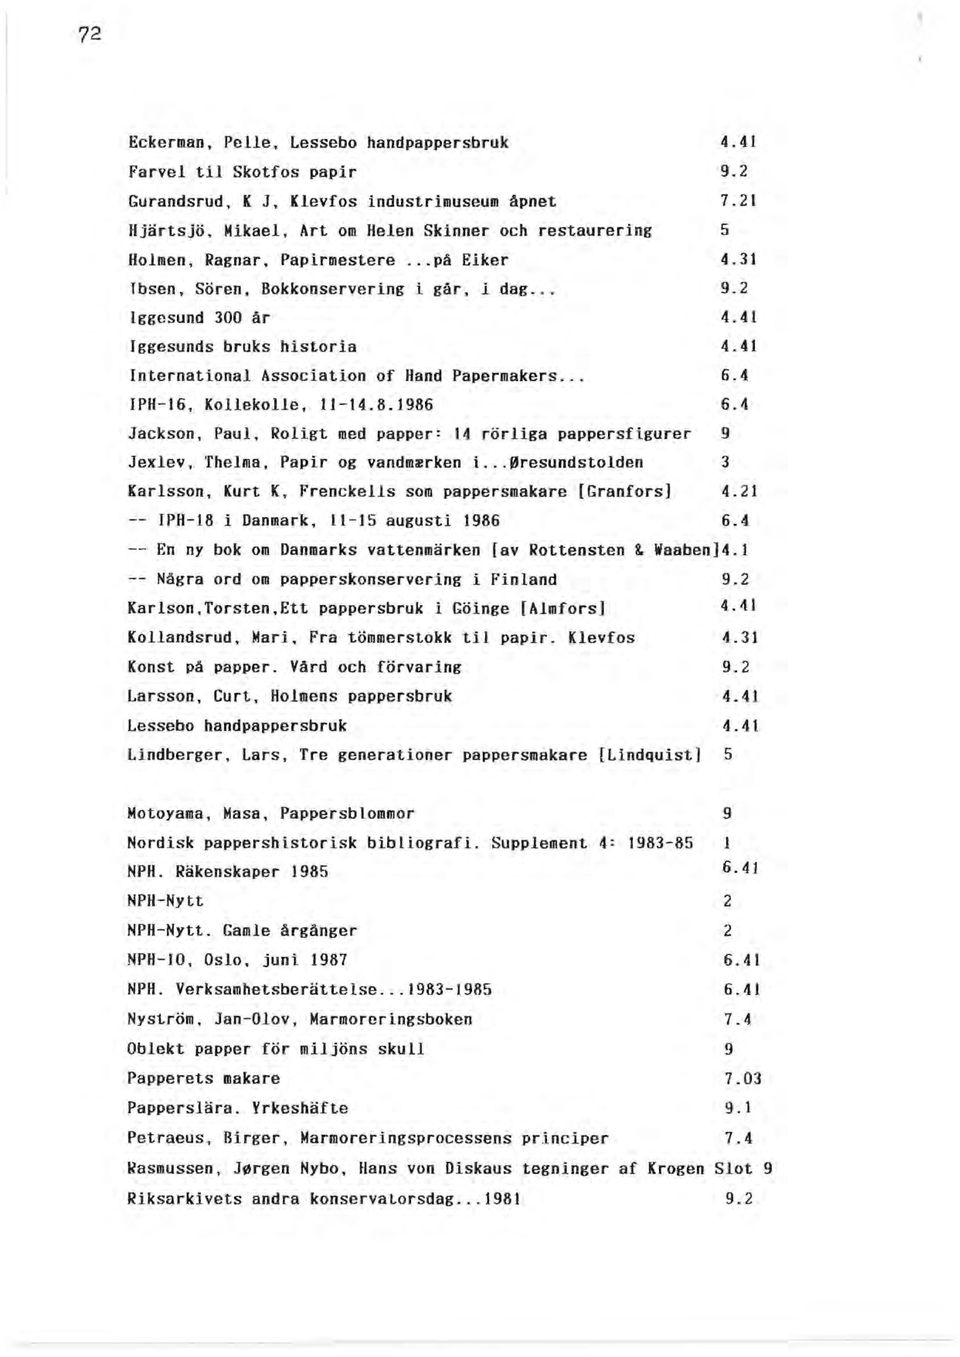 41 Iggesunds bruks historia 4.41 International Association of Hand Papermakers... 6.4 IPH-16, Kollekolle. 11-14.8.1986 6.